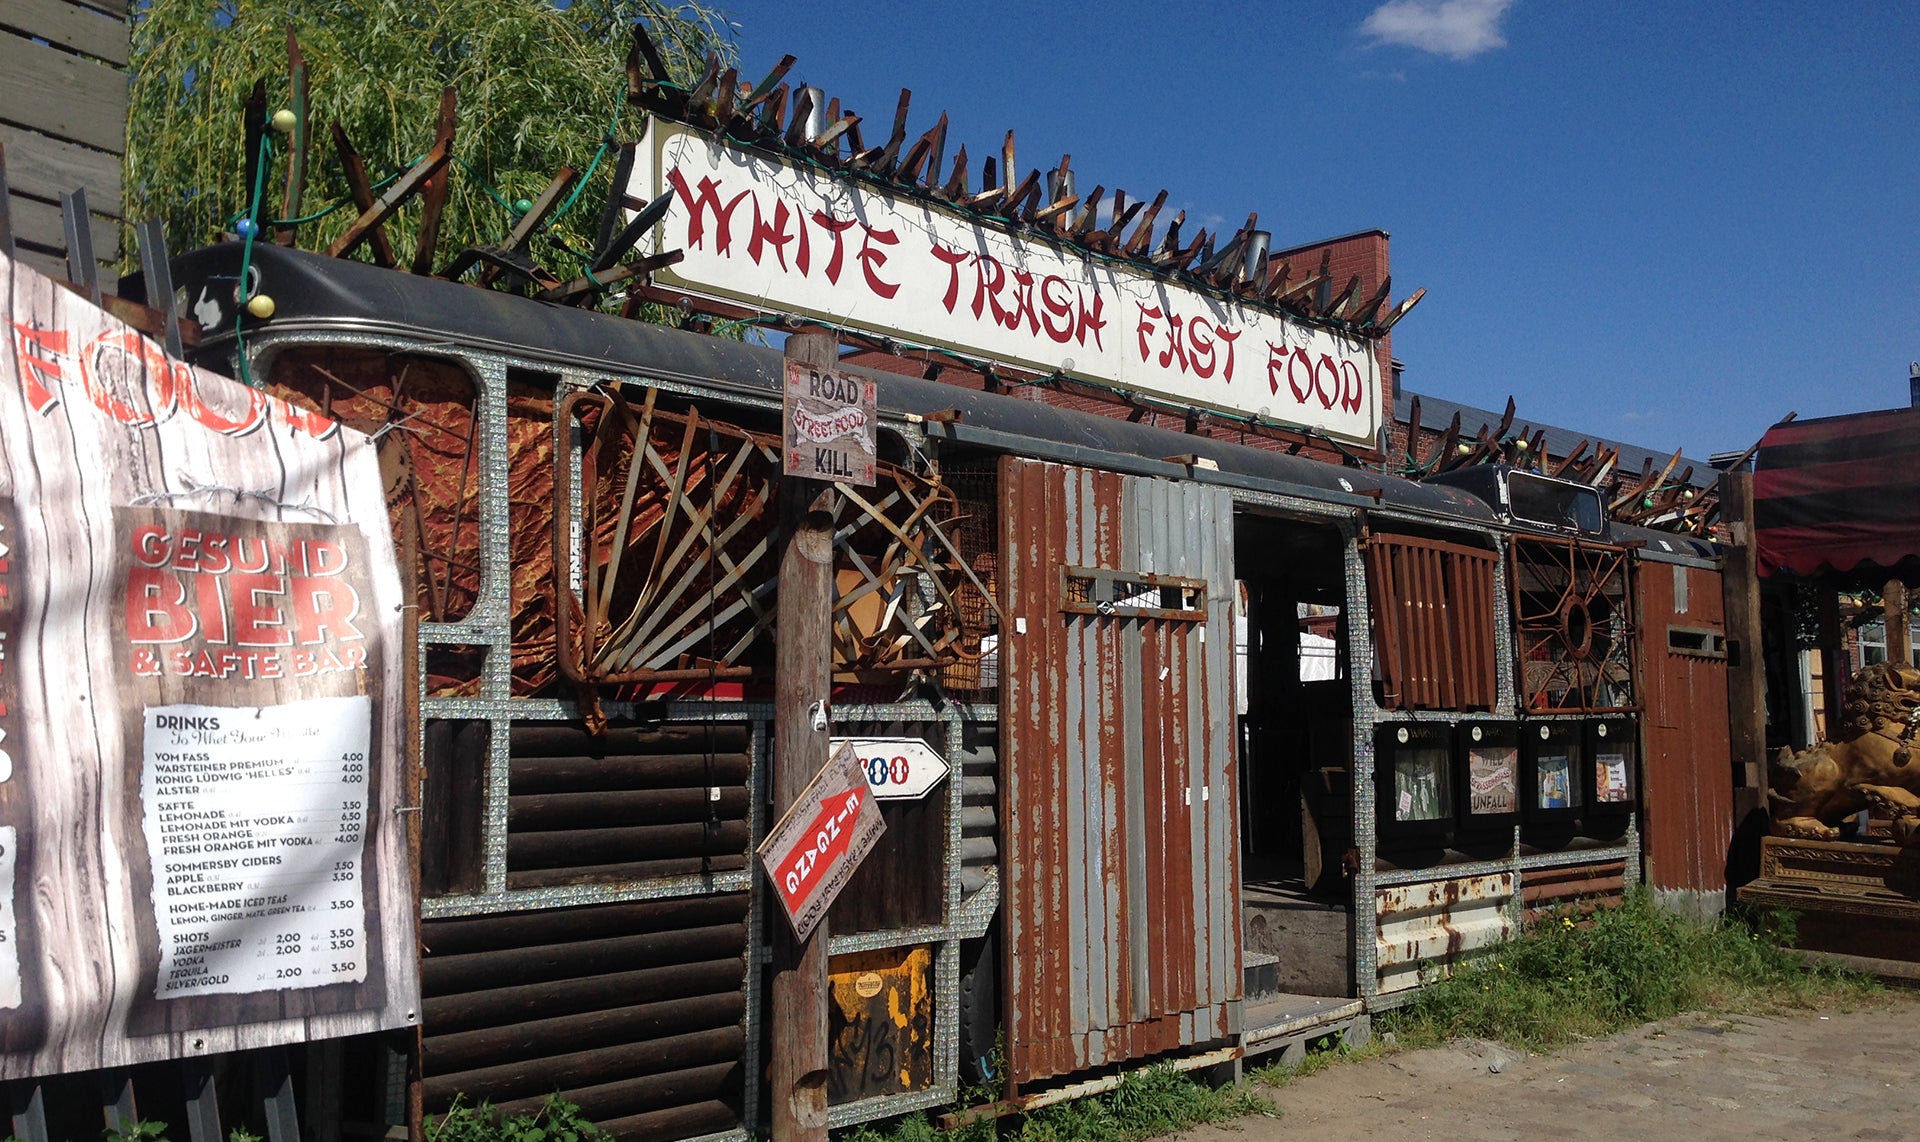 Food Stop at White Trash Food